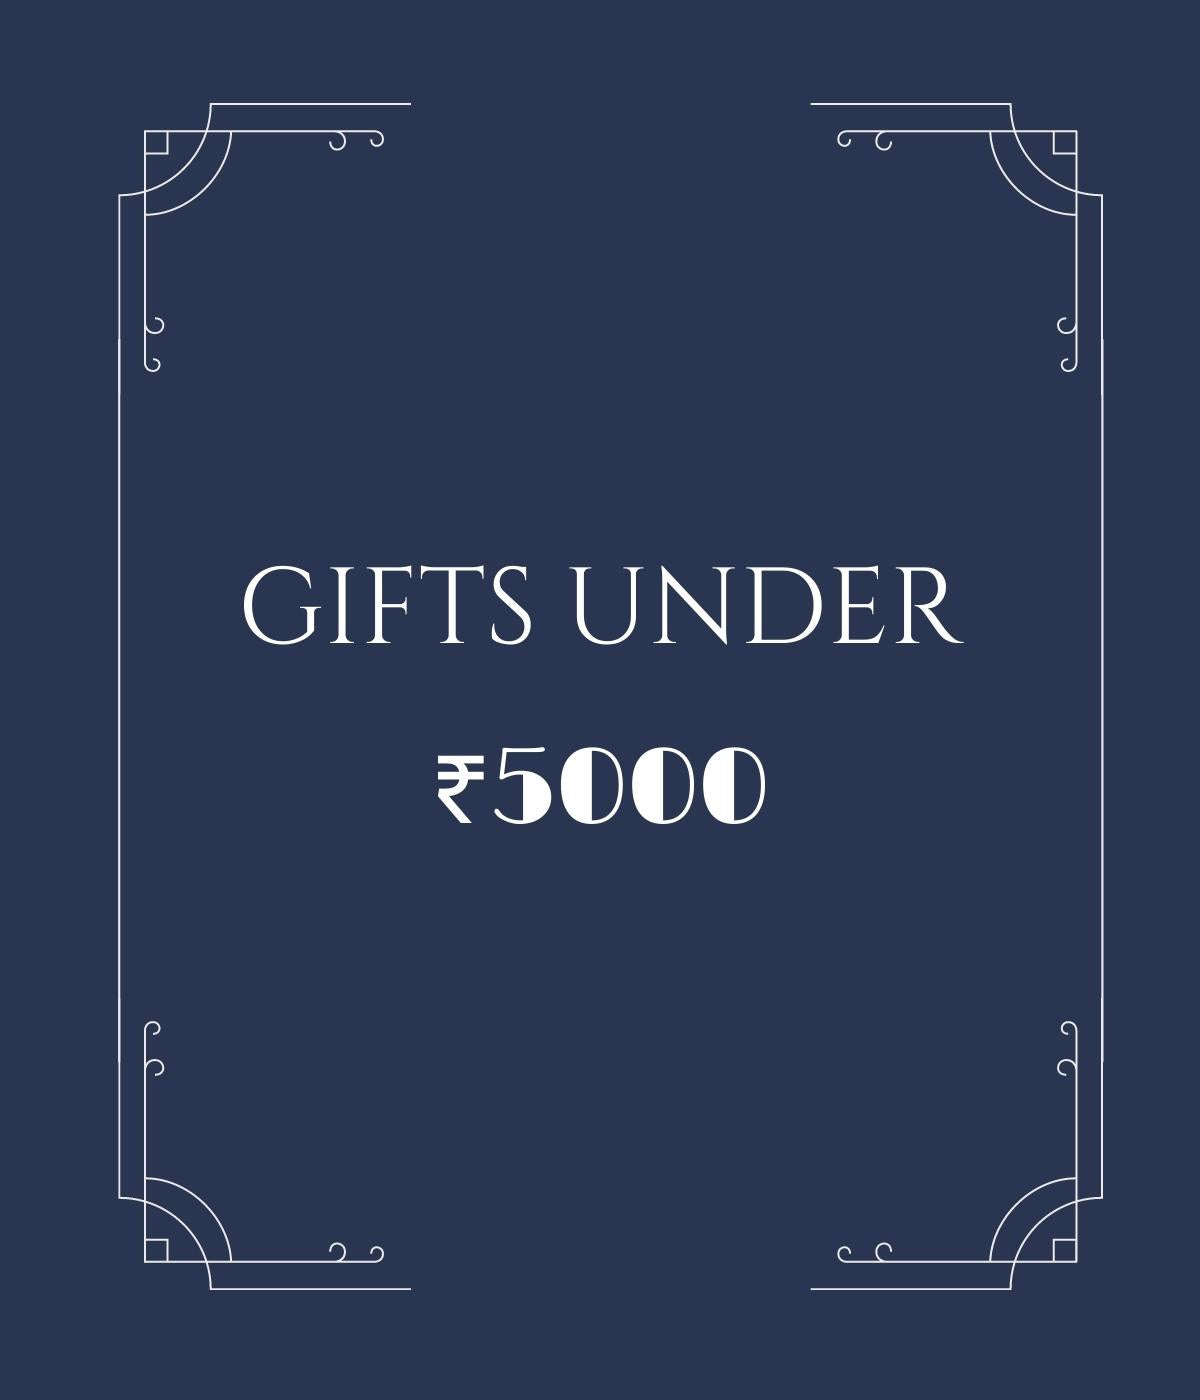 Gifts under ₹5000